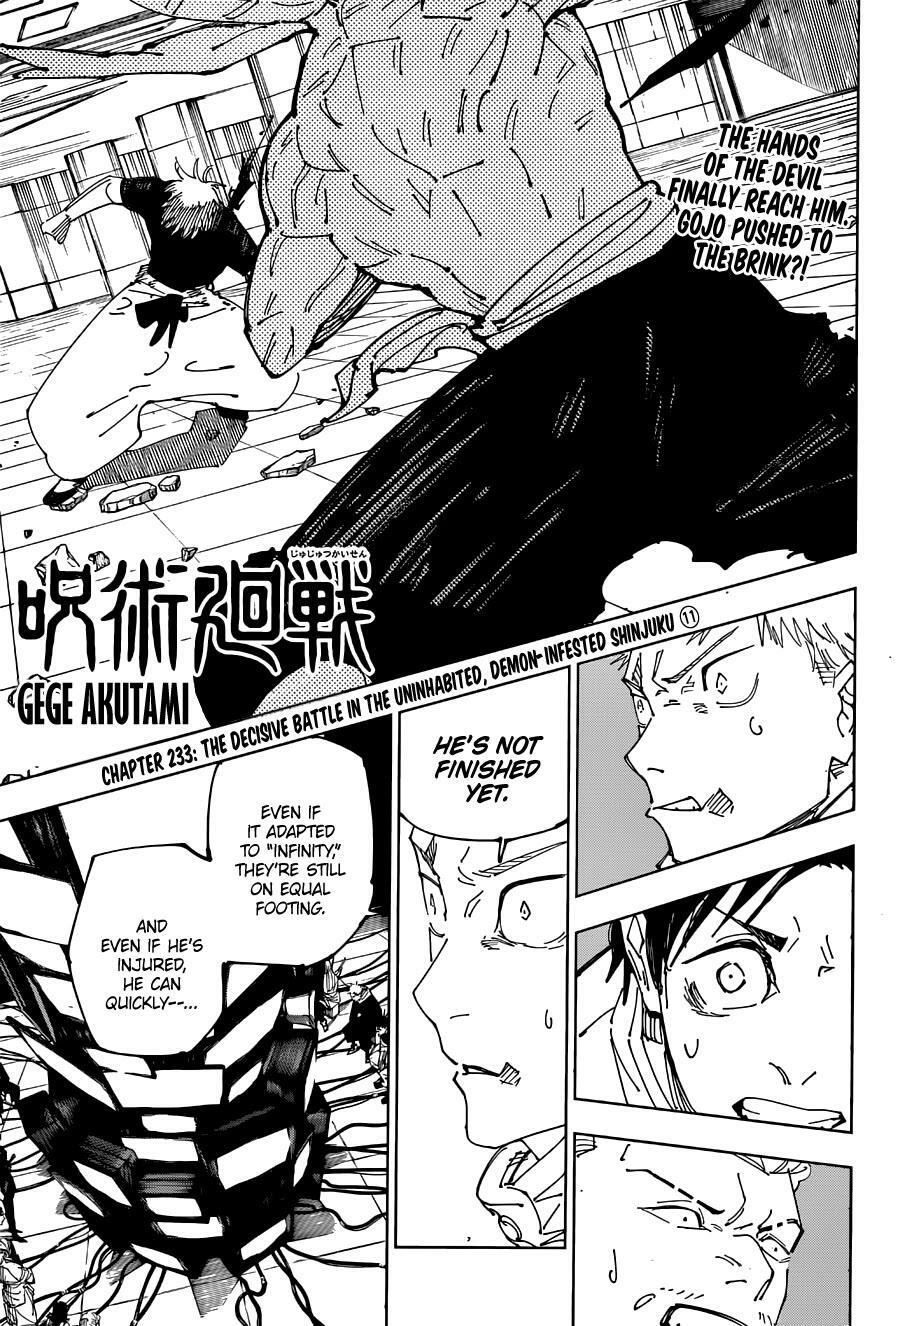 Jujutsu Kaisen Chapter 233: The Decisive Battle In The Uninhabited, Demon-Infested Shinjuku ⑪ page 1 - Mangakakalot